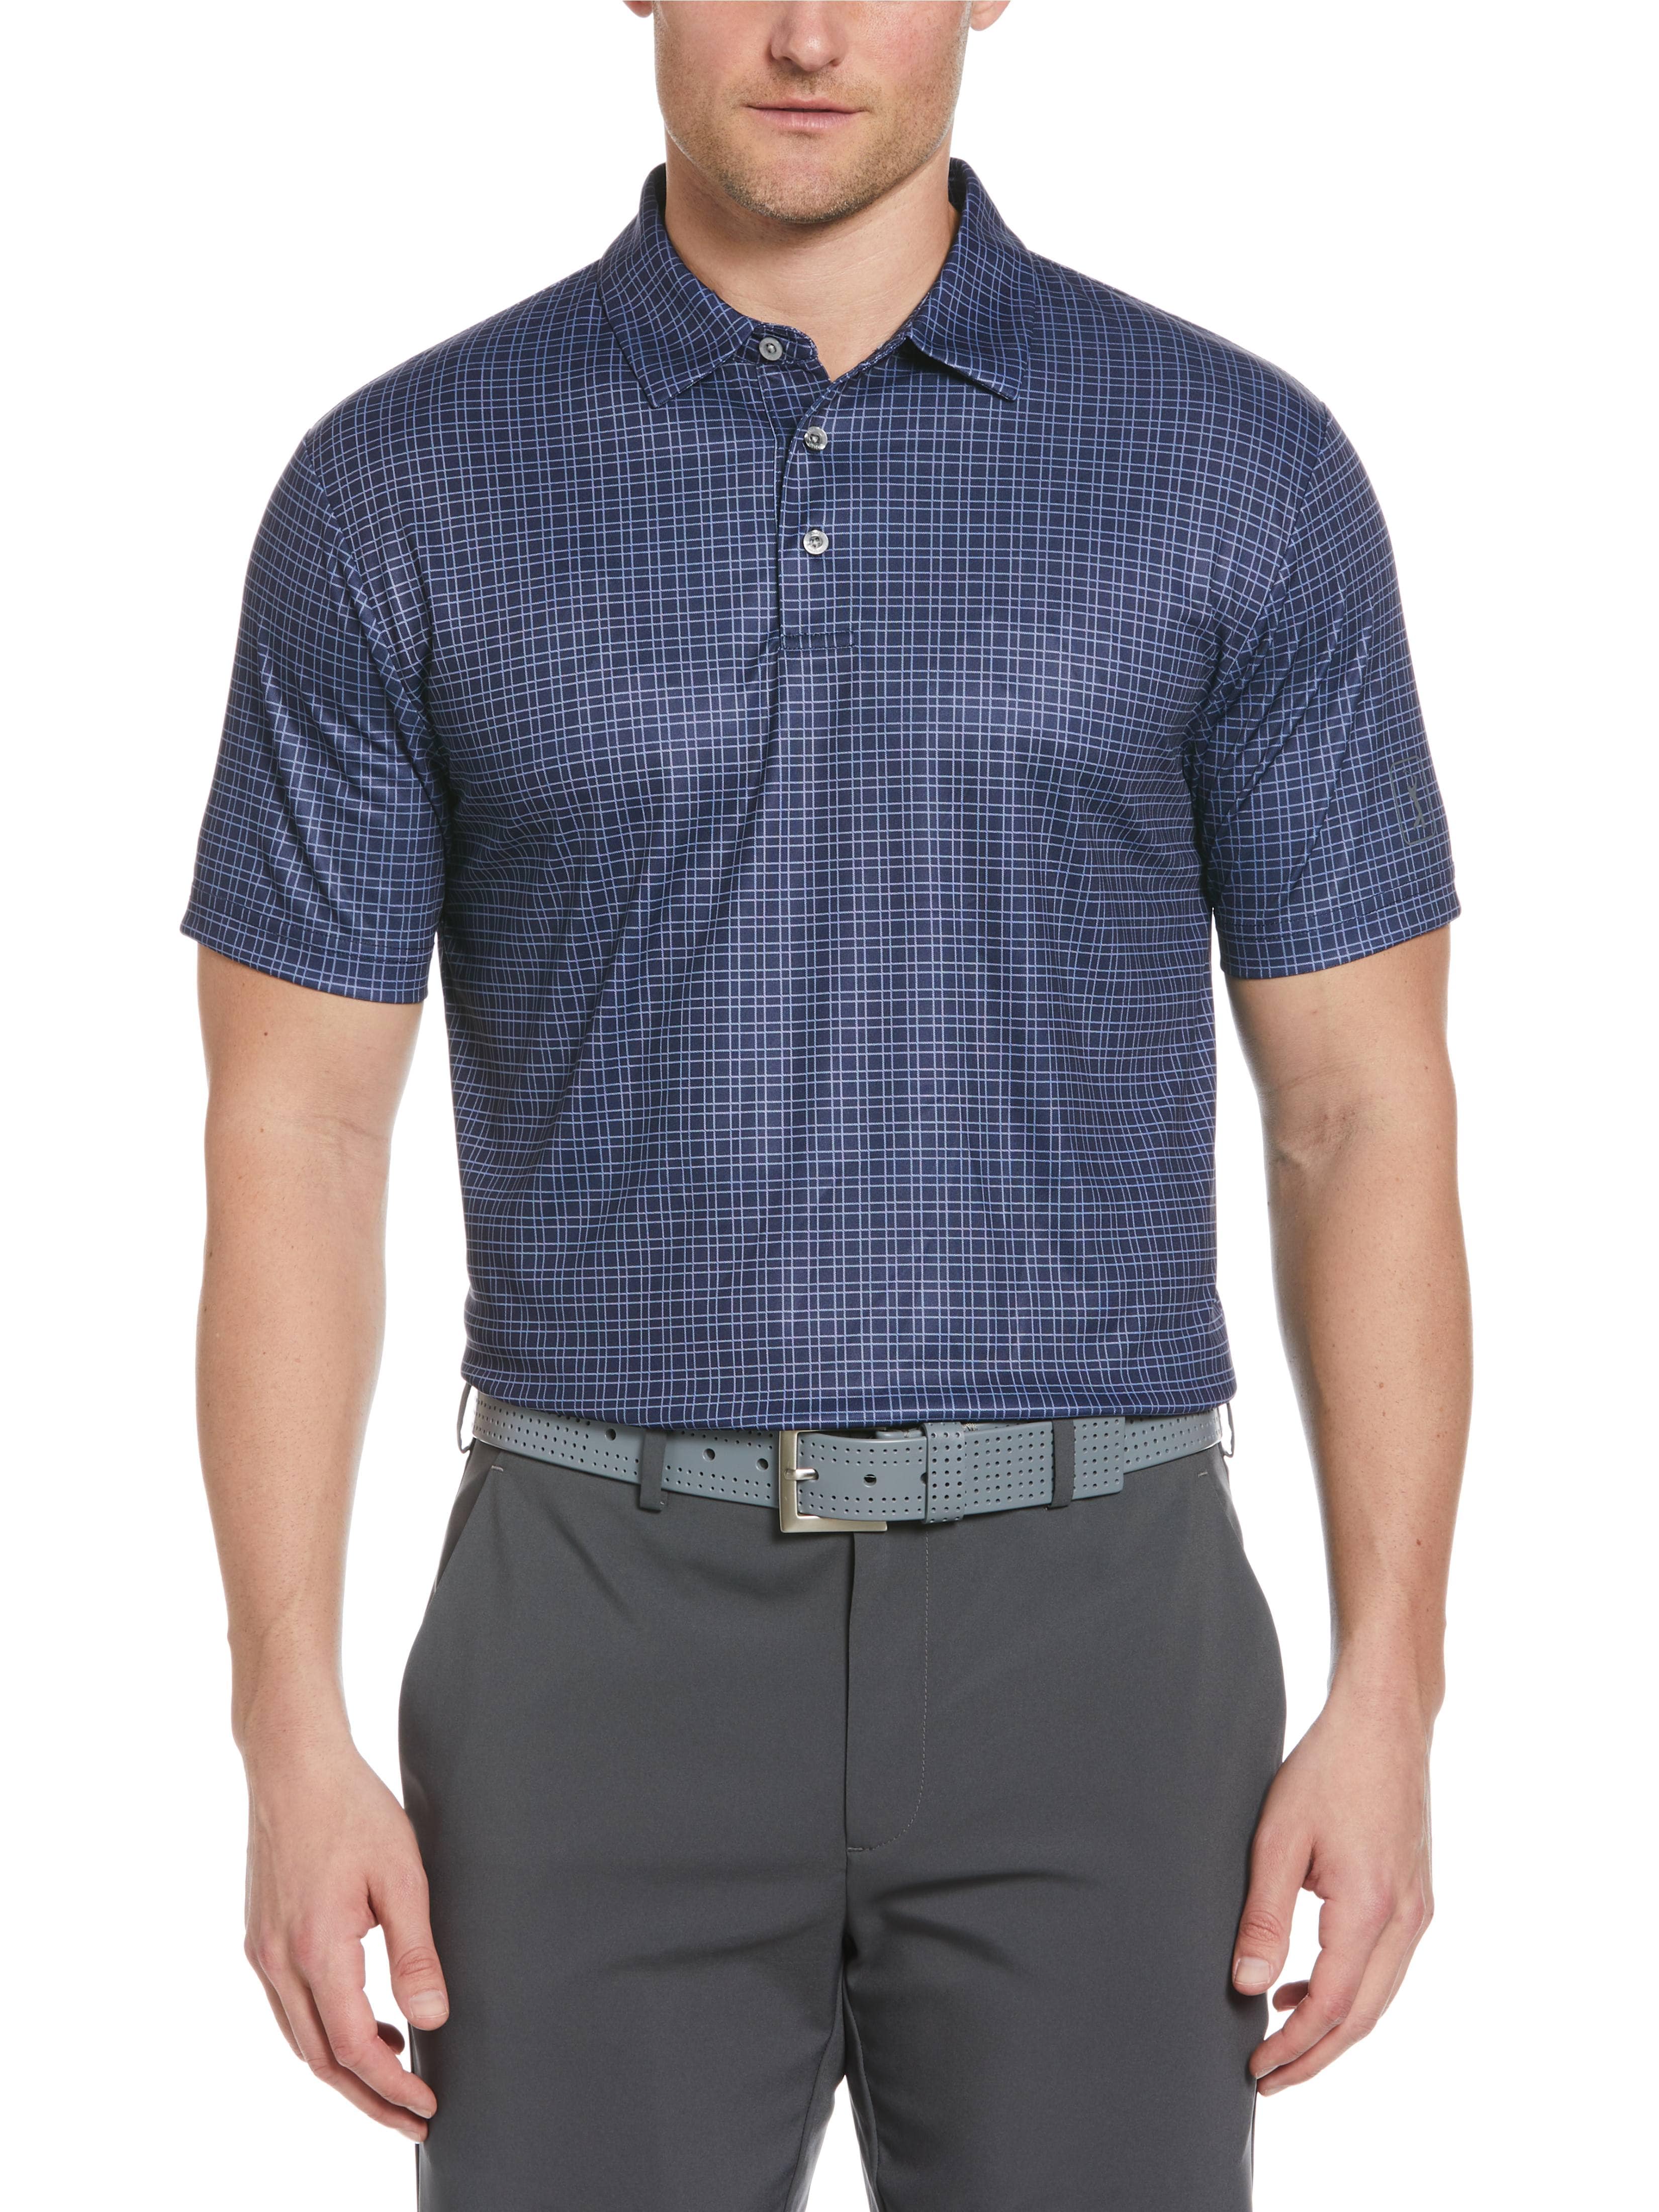 PGA TOUR Apparel Mens Menswear Print Golf Polo Shirt, Size Medium, Navy Blue, 100% Polyester | Golf Apparel Shop